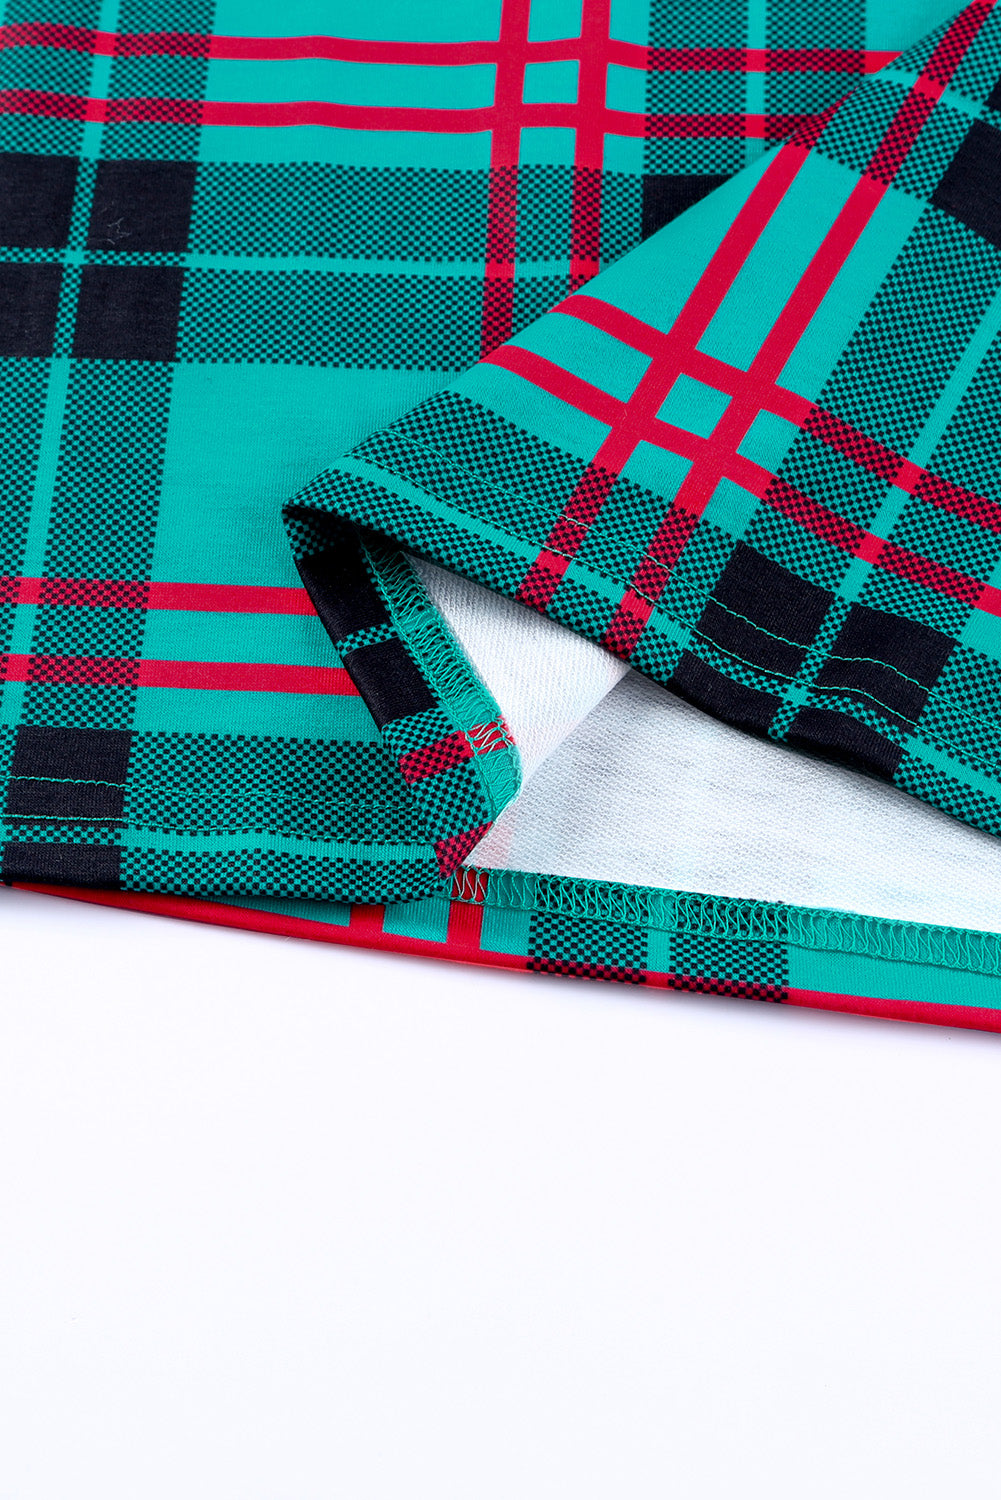 Green Plaid Print Long Sleeve Top and Drawstring Joggers Pajama Set - US2EInc Apparel Plug Ltd. Co